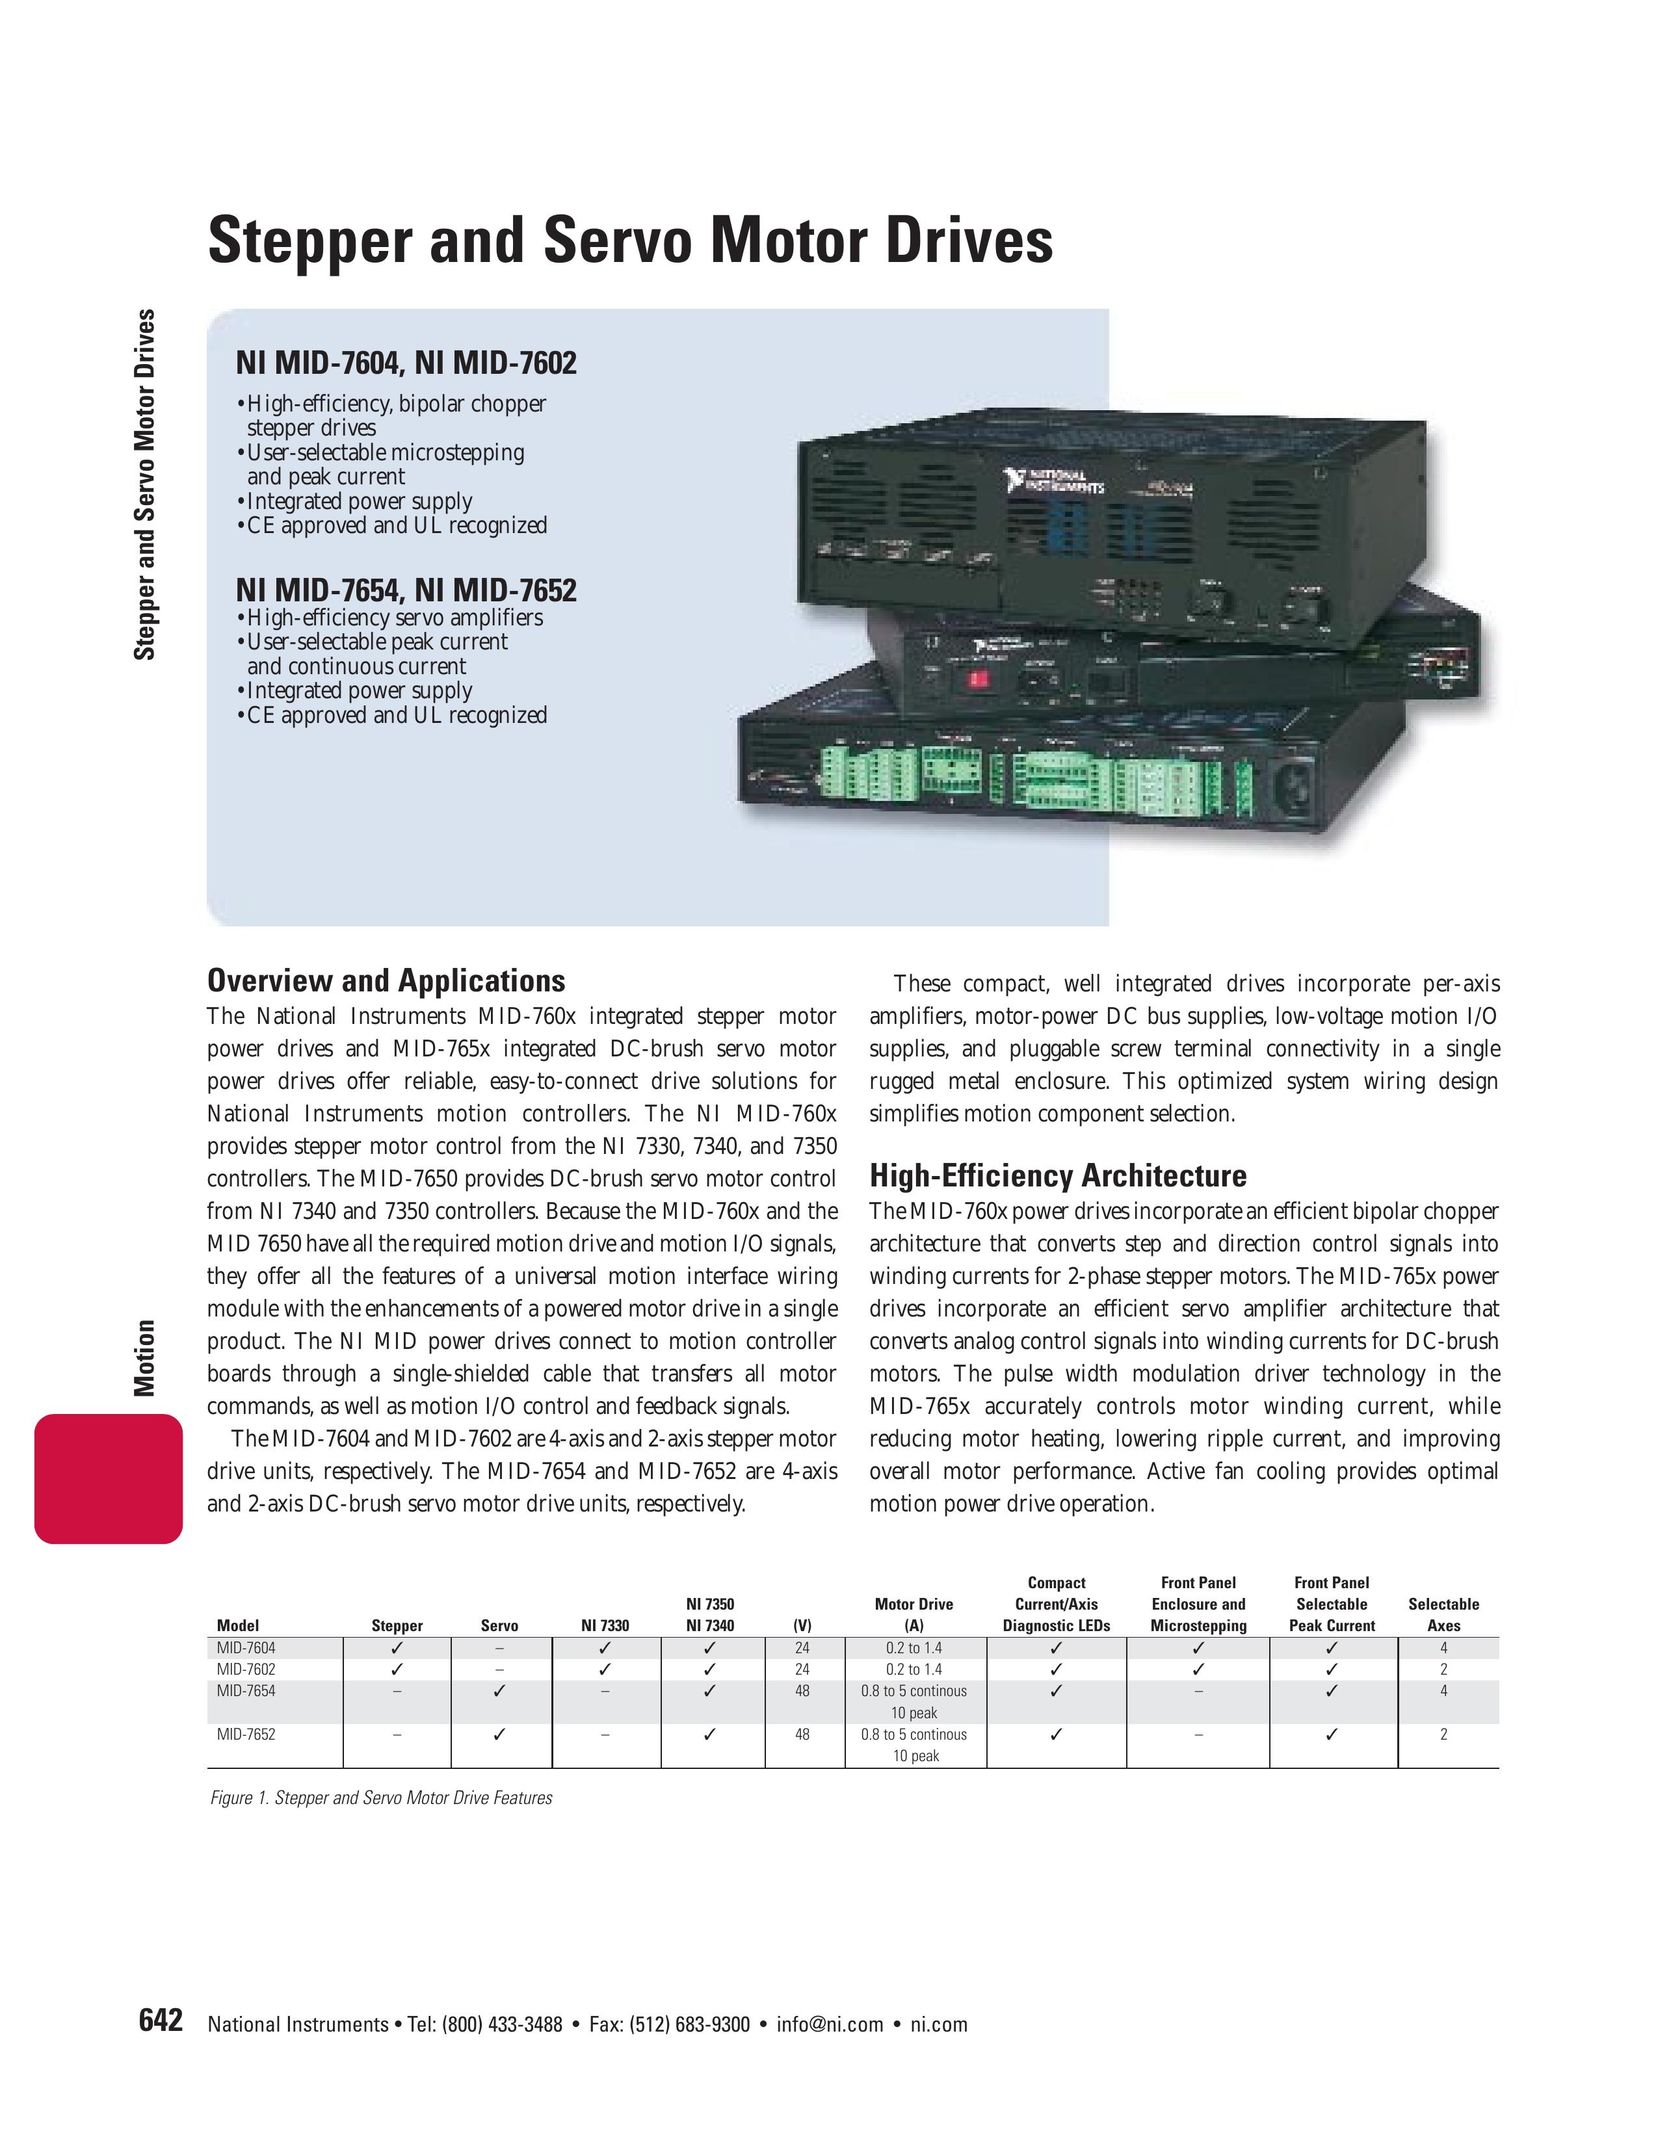 National Instruments NI MID-760X Stepper Machine User Manual